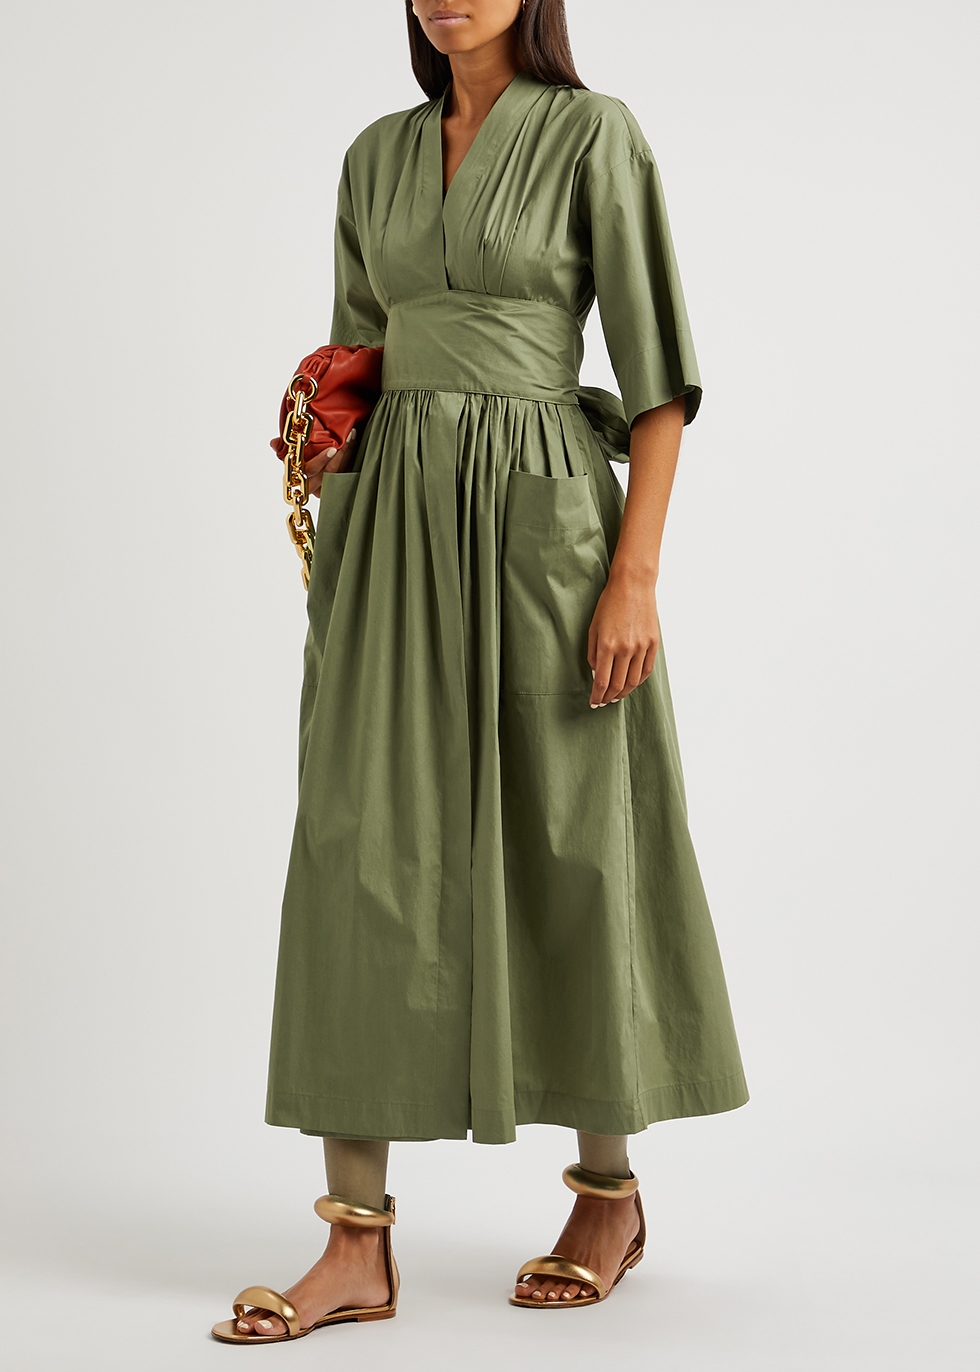 Designer Wrap Dresses For Women | Harvey Nichols